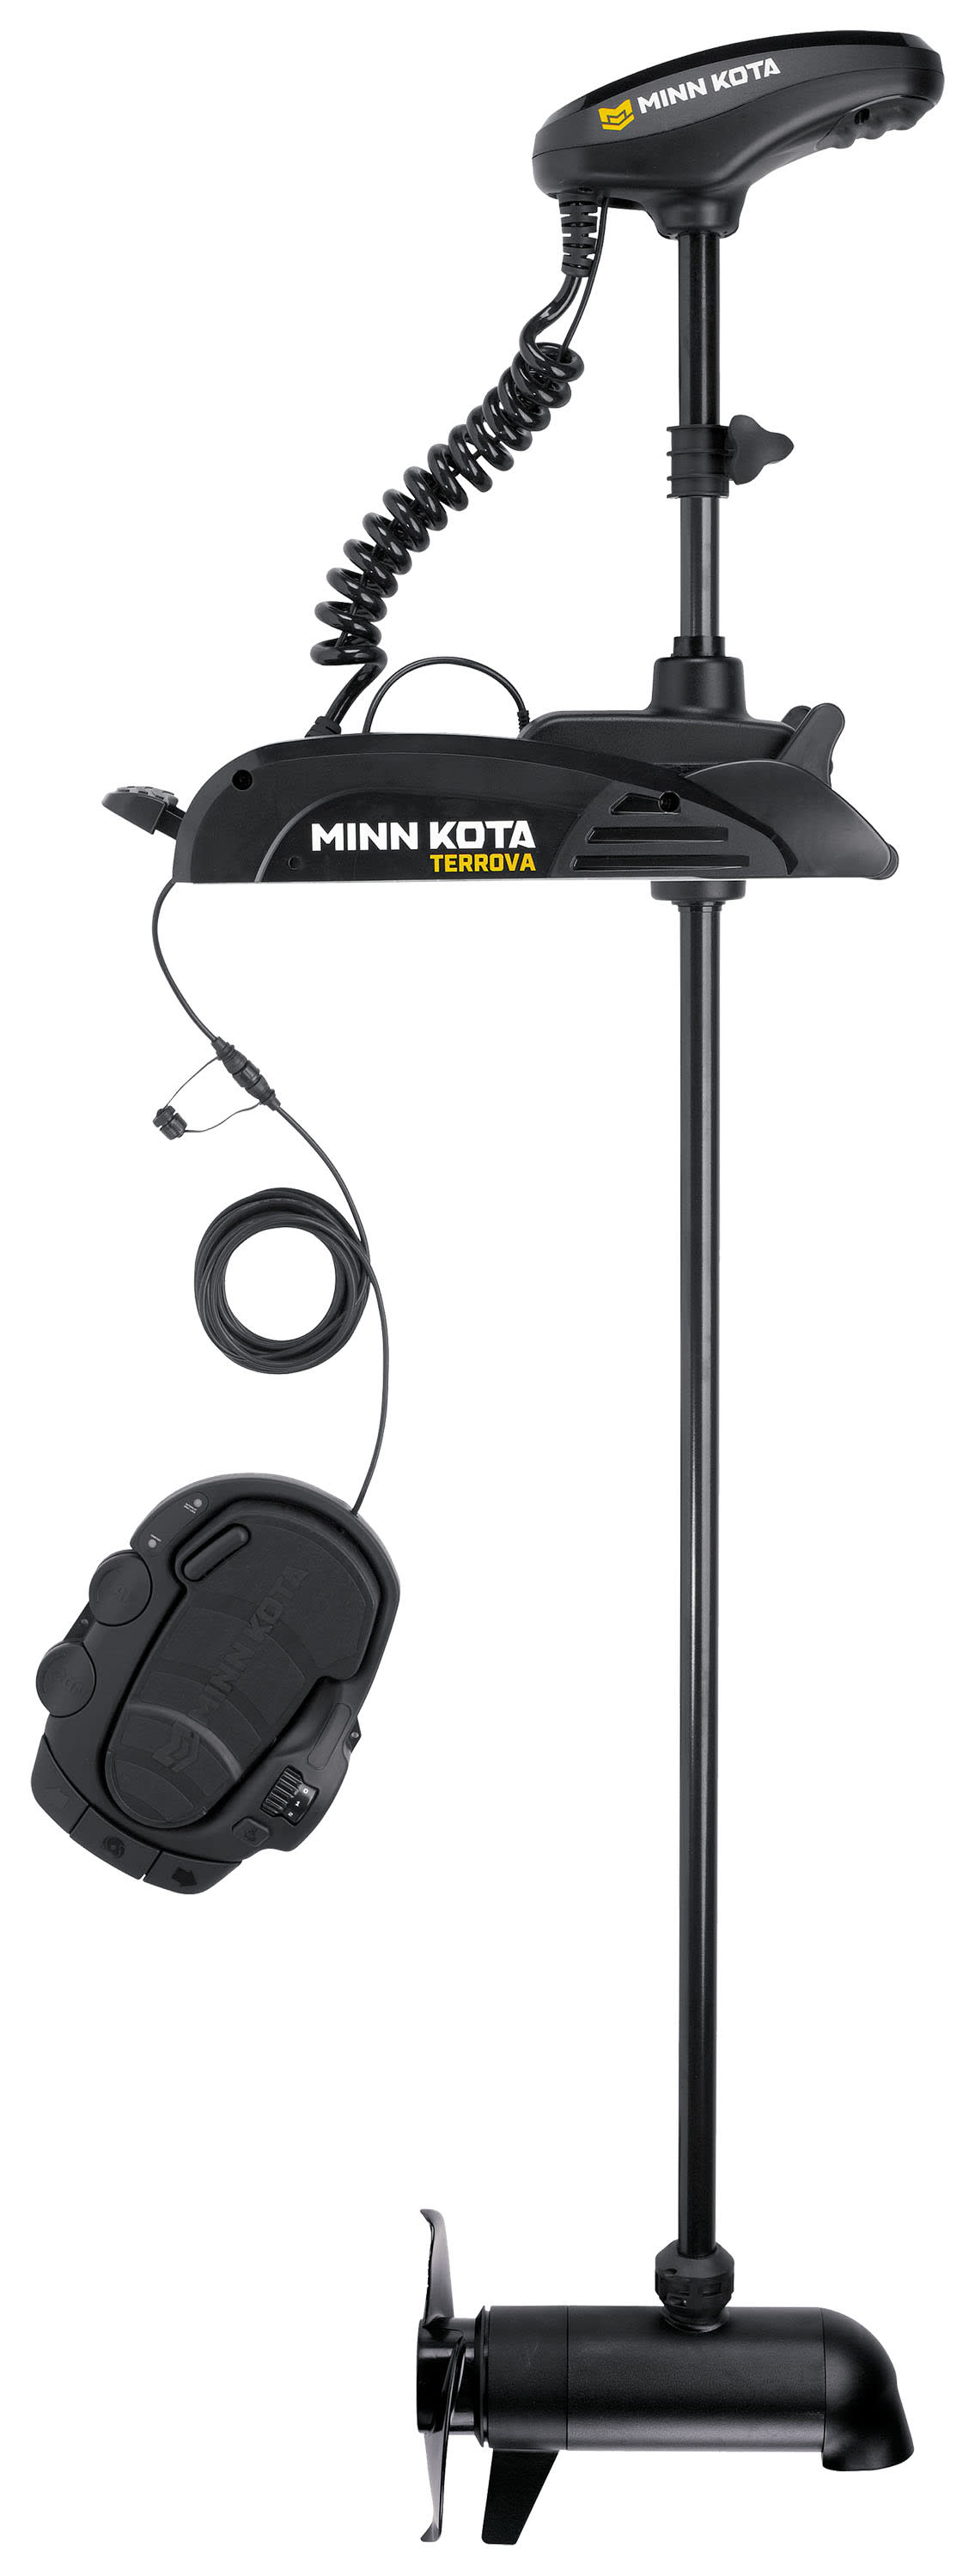 Minn Kota® Terrova® 112lb 60" Freshwater Trolling Motor w/Dual Spectrum CHIRP Sonar and Wireless Remote